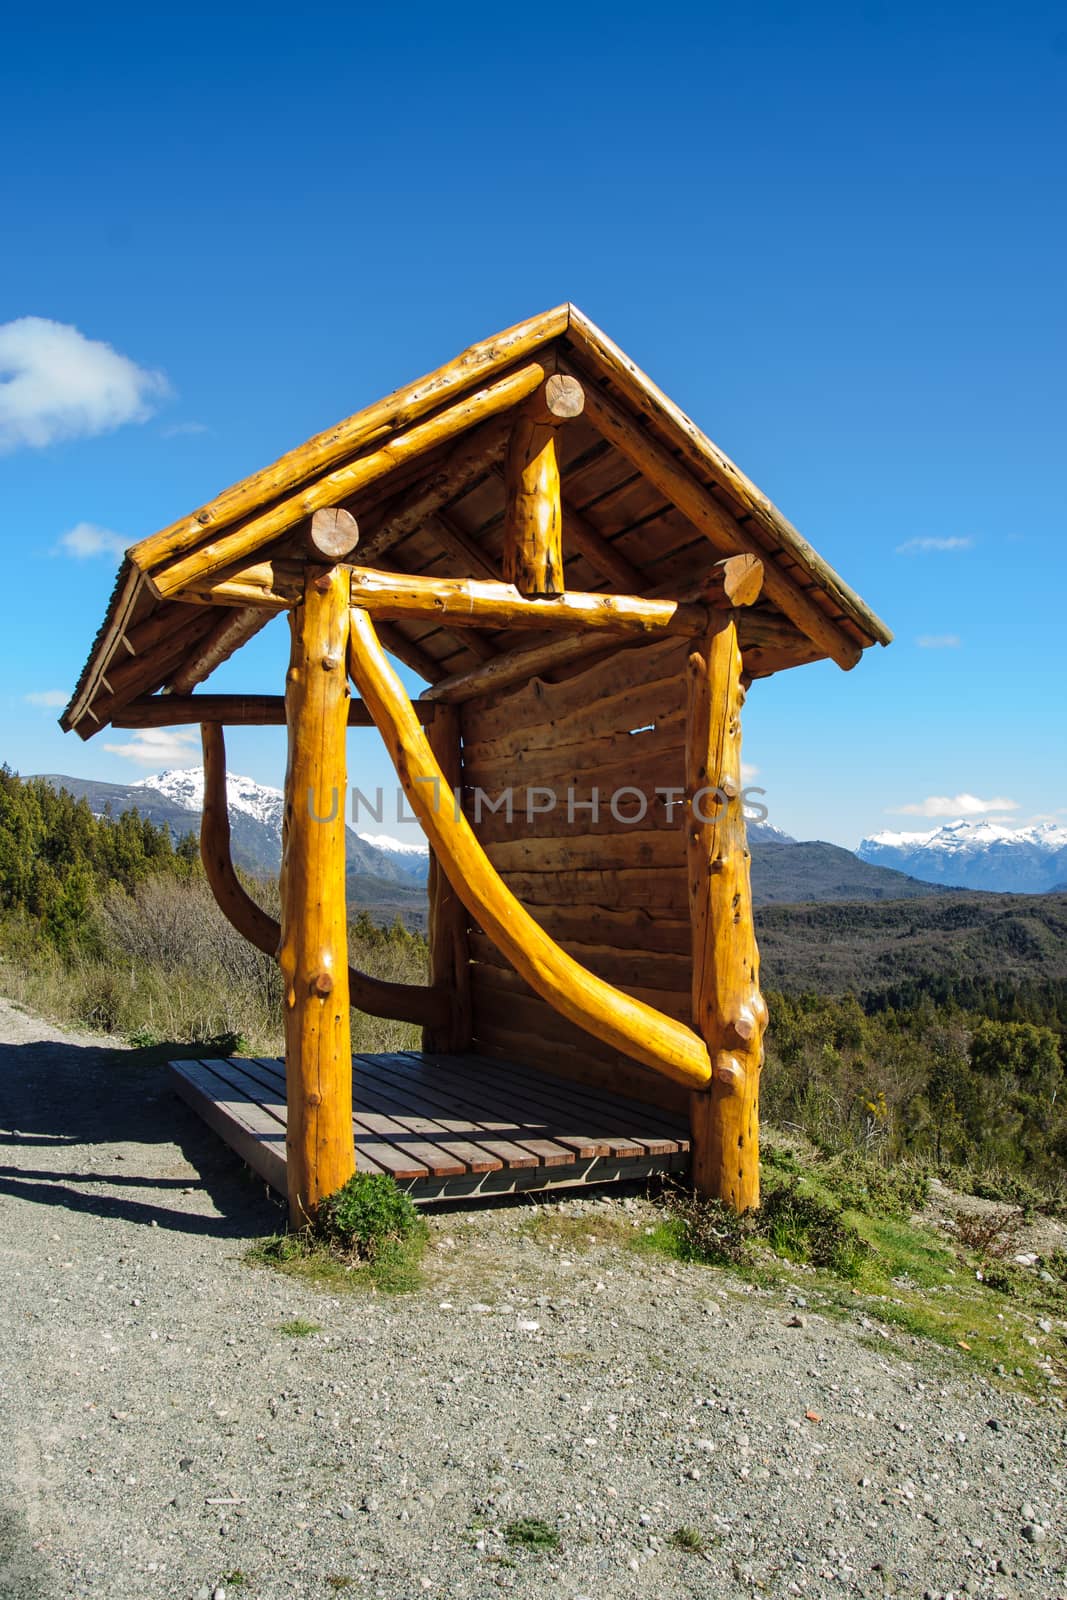 Bus station in Patagonia by RnDmS